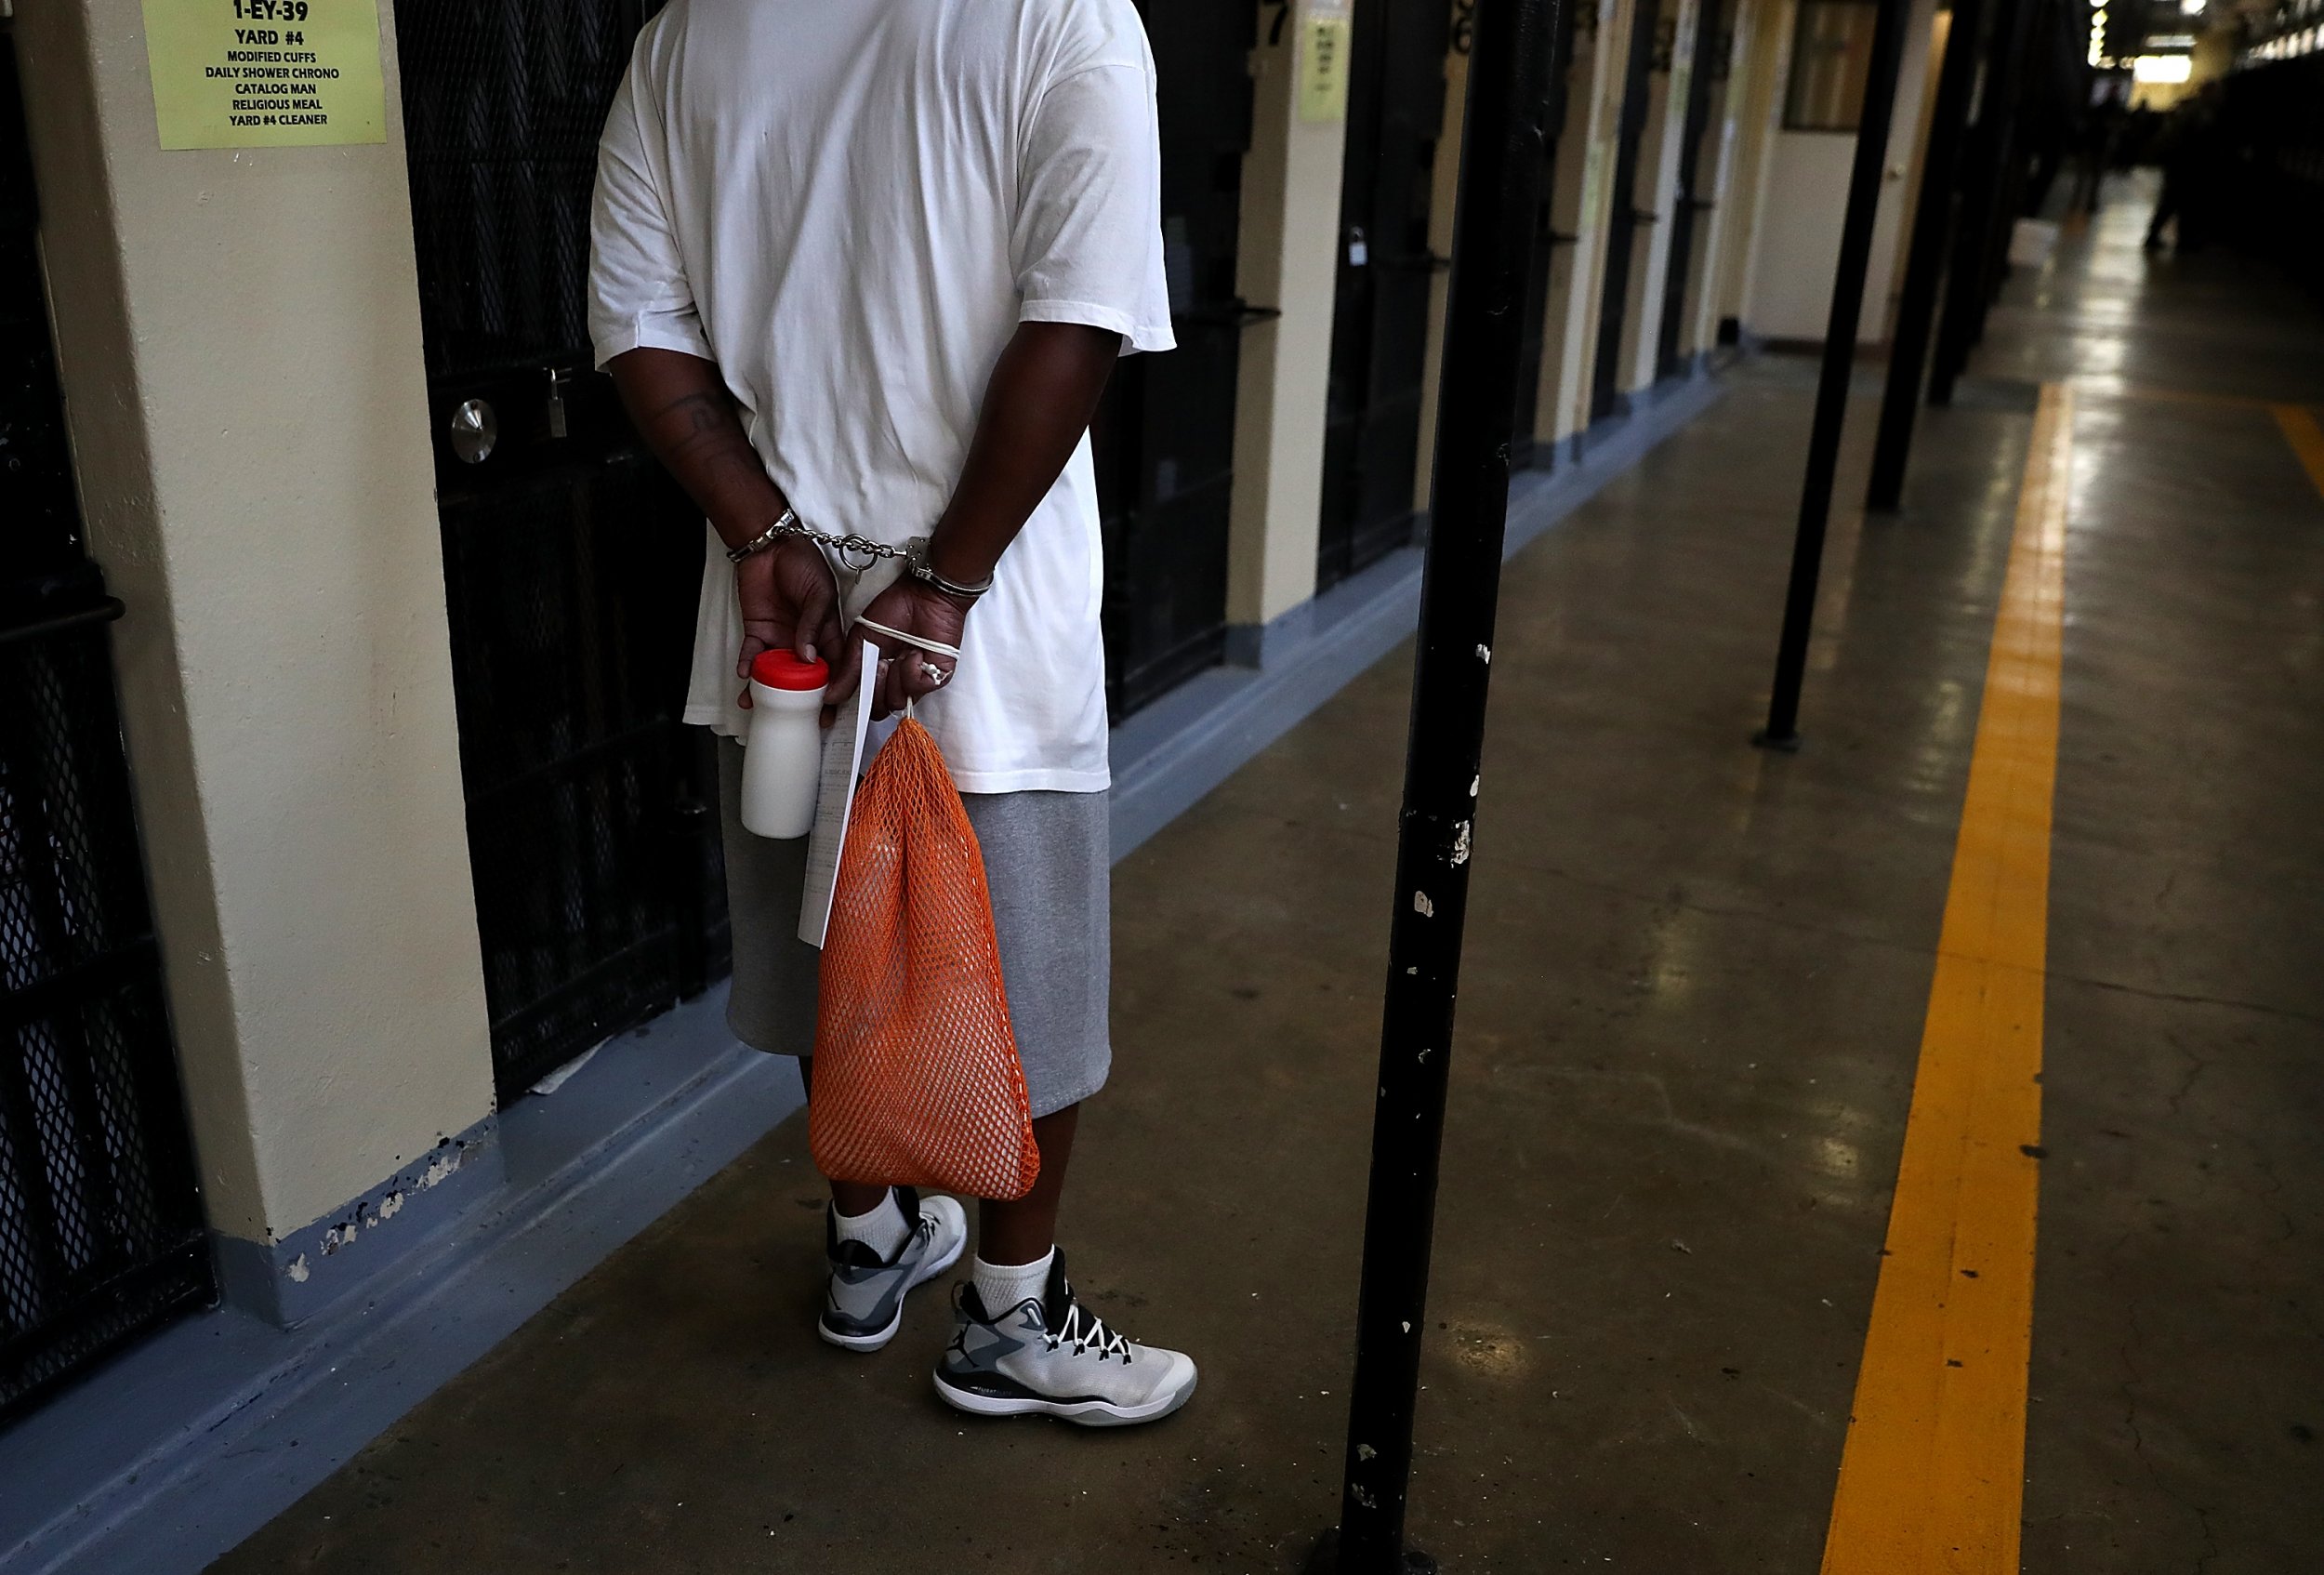 San Quentin prison inmate